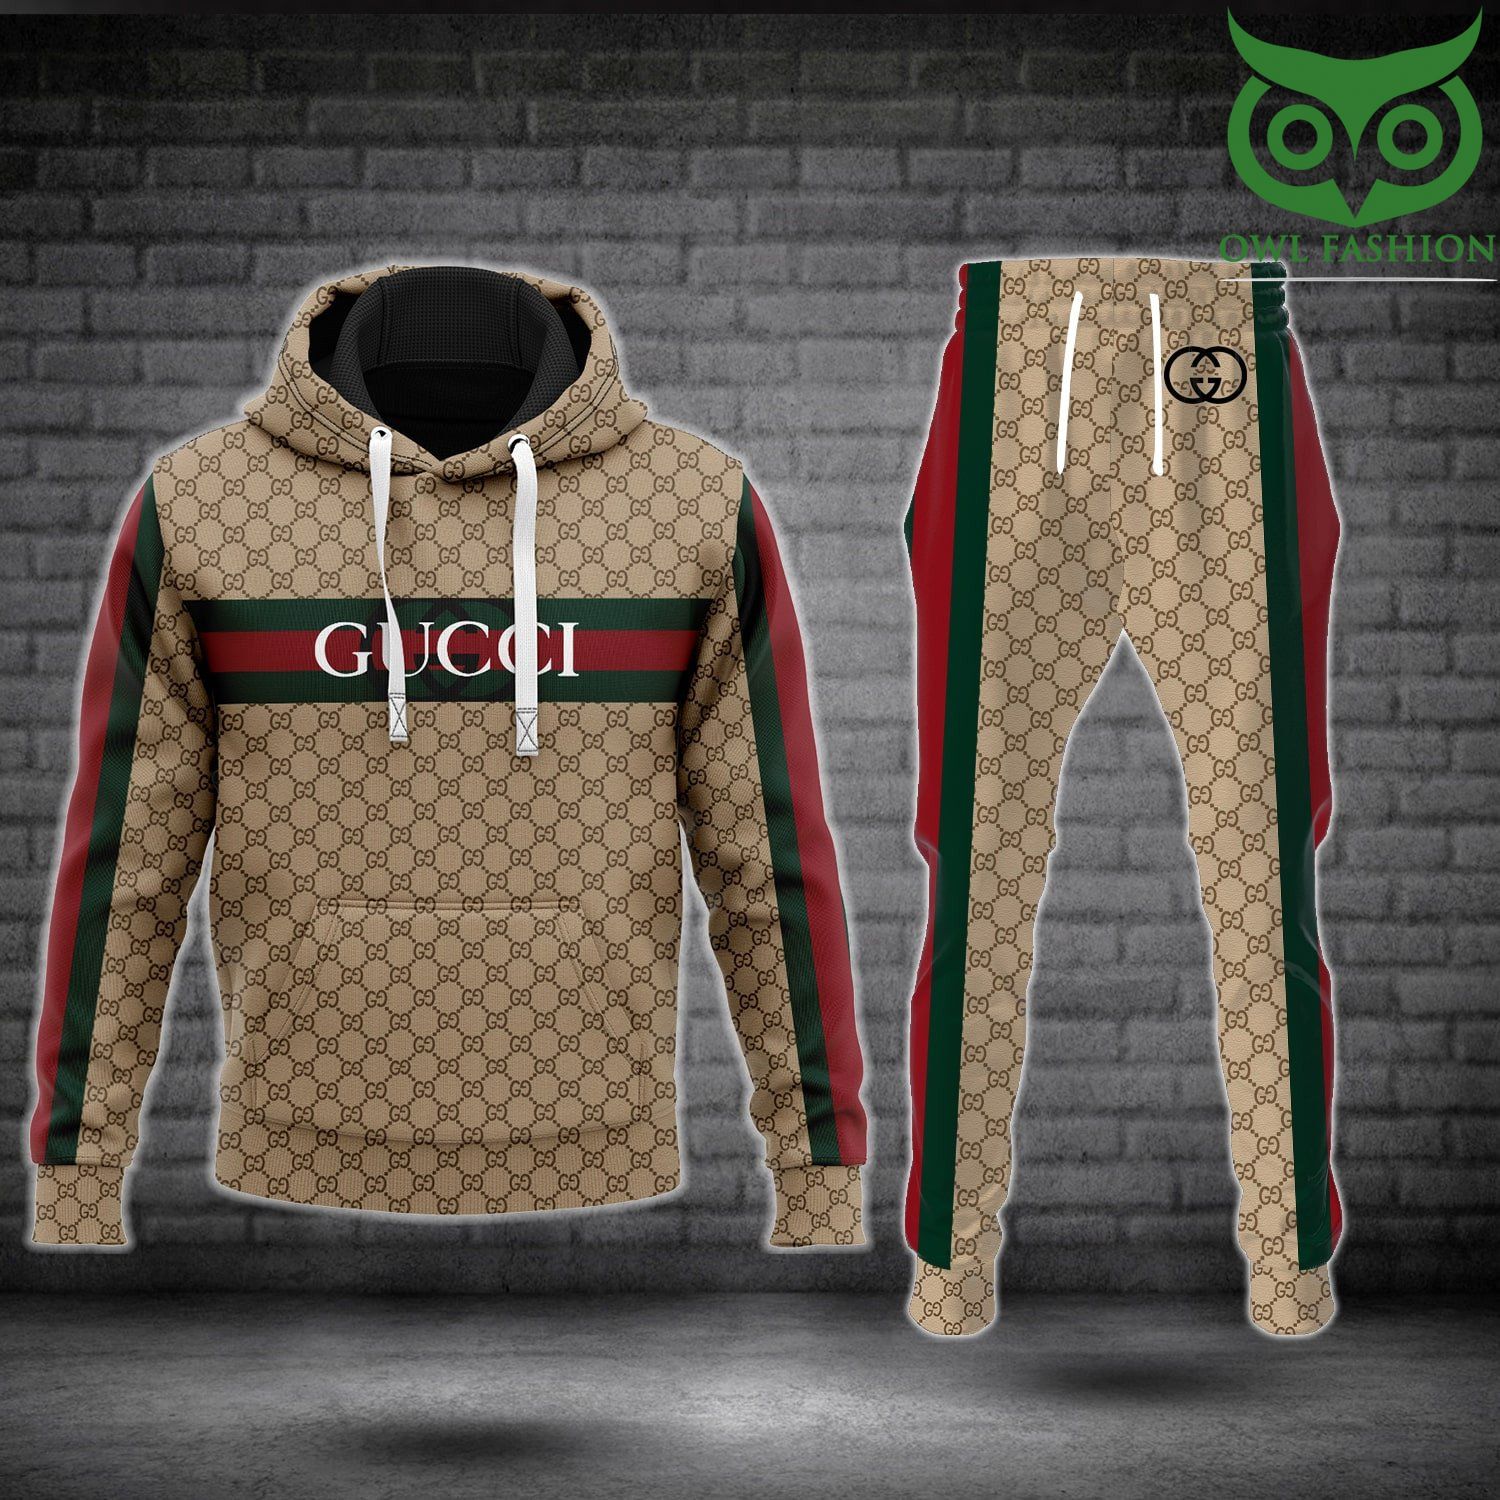 Gucci signature colors 3D hoodies and pants